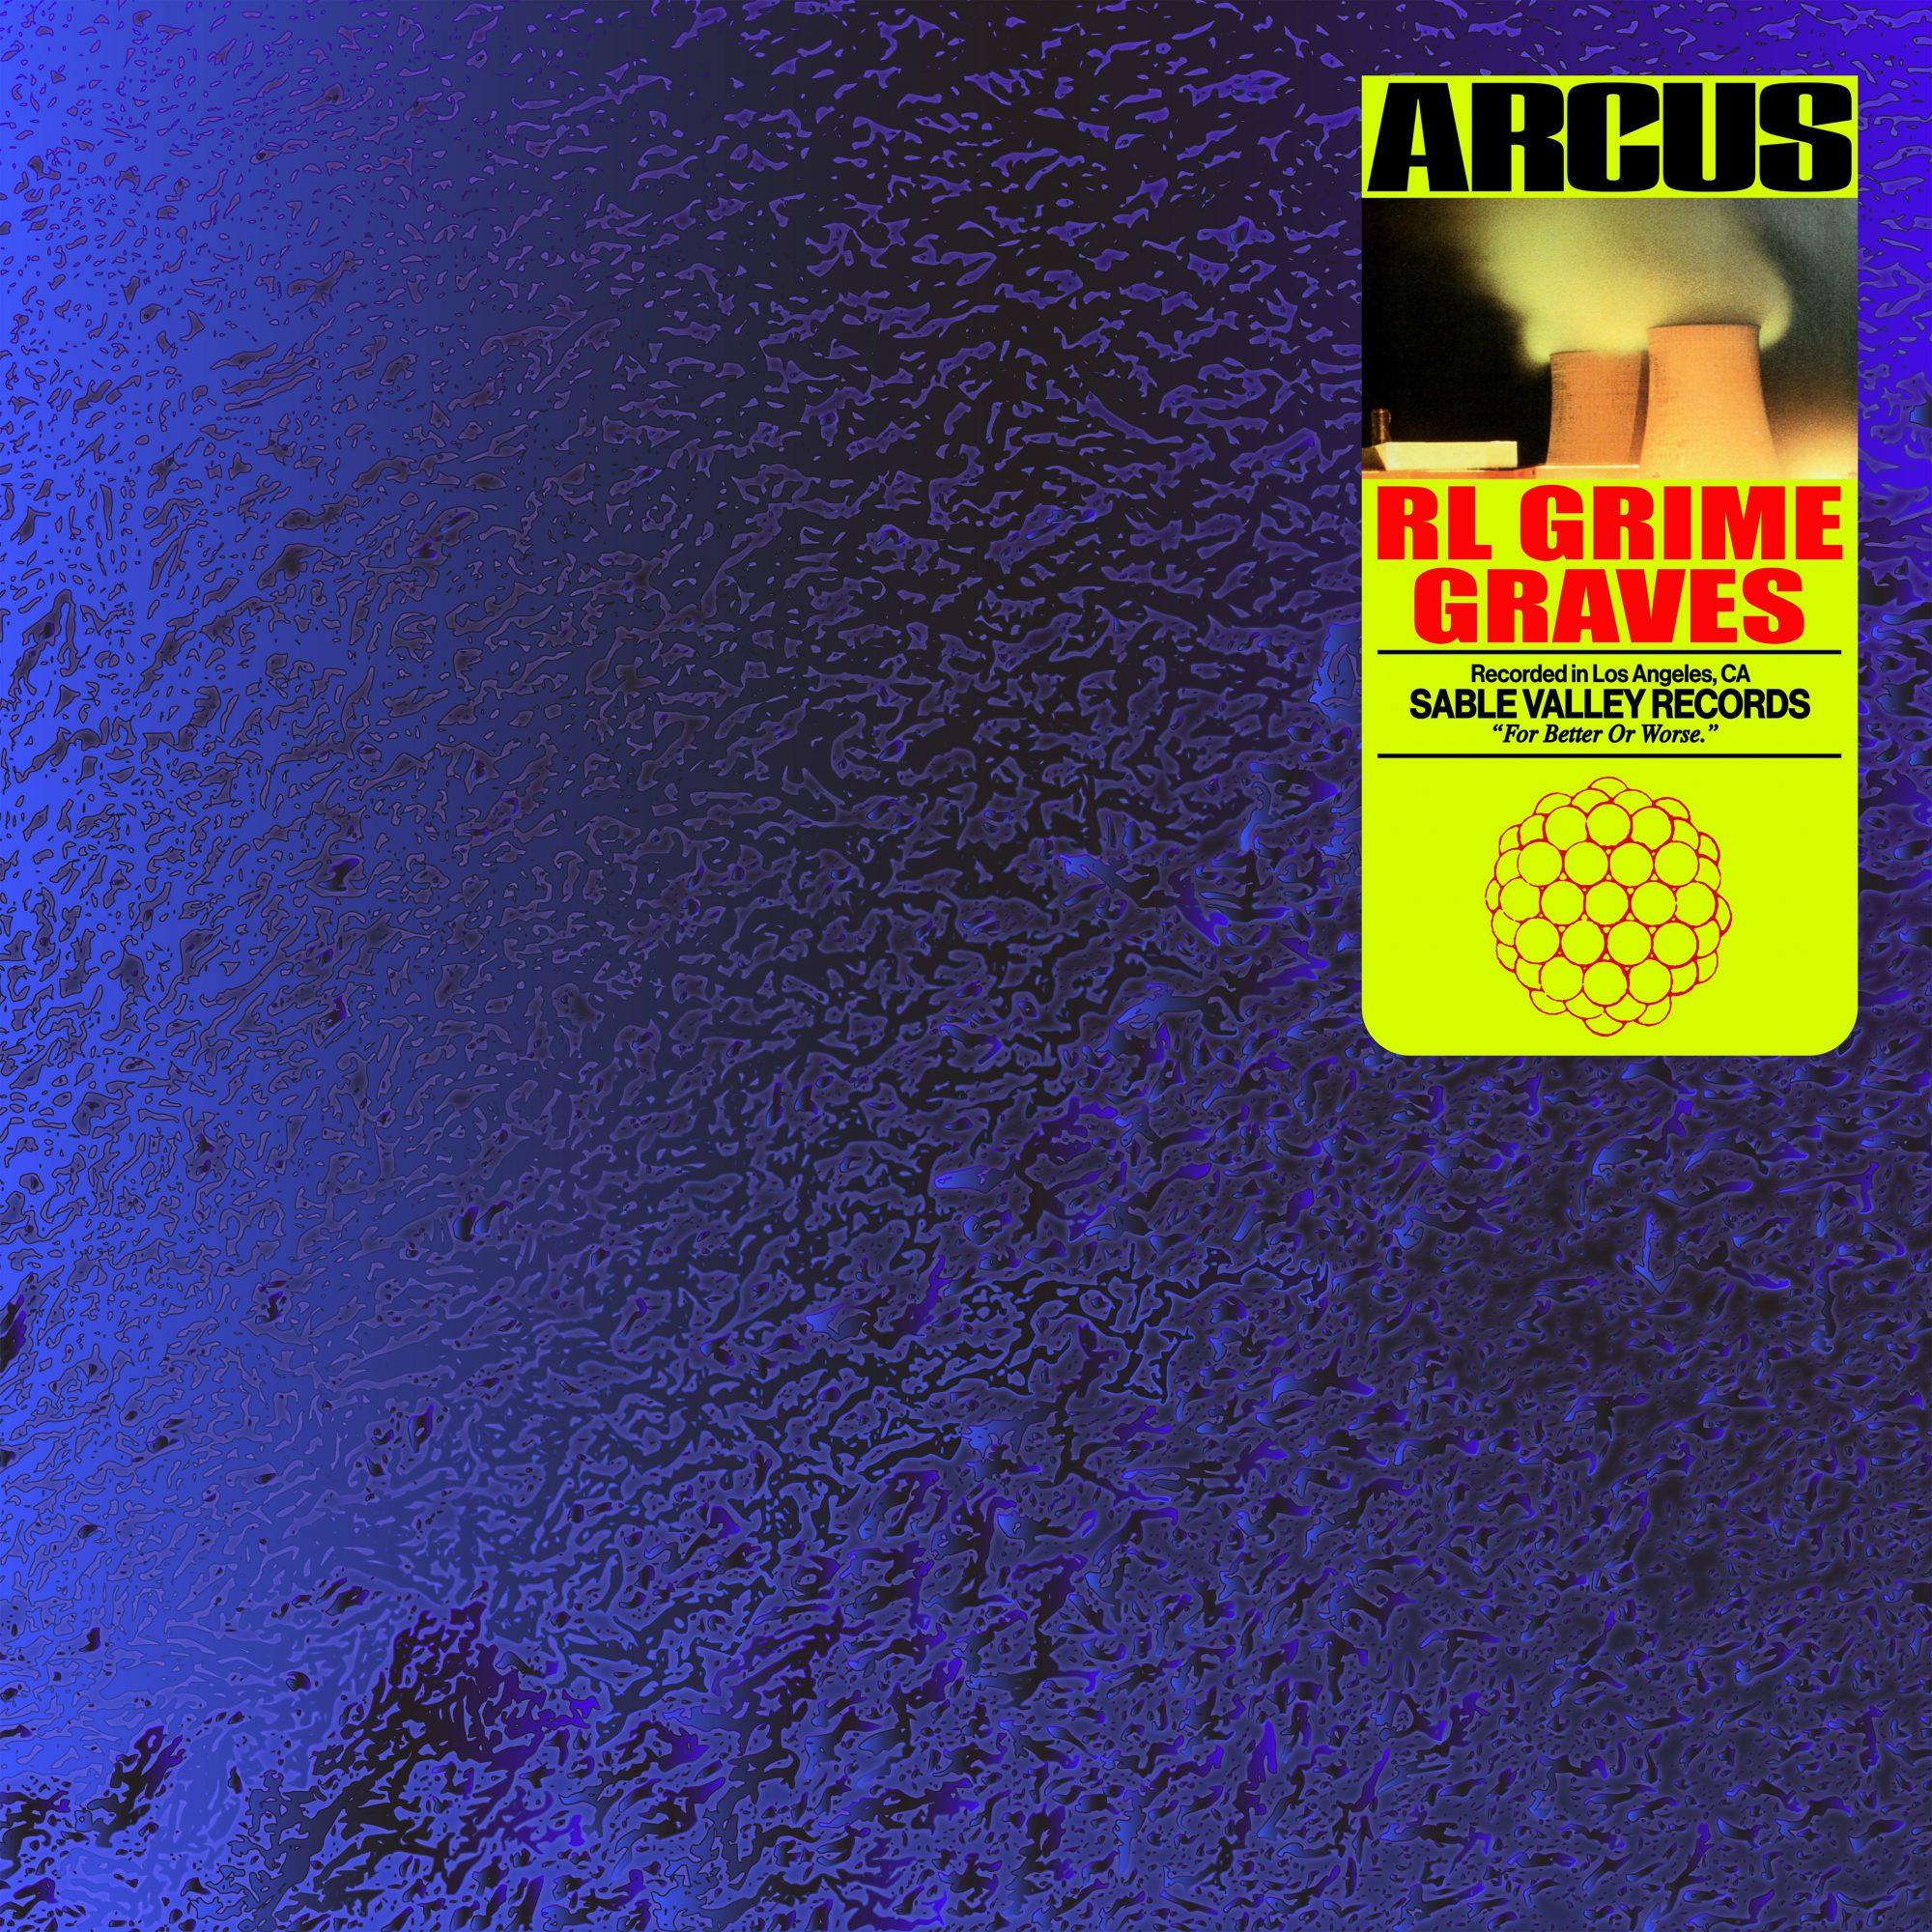 RL Grime & Graves - Arcus